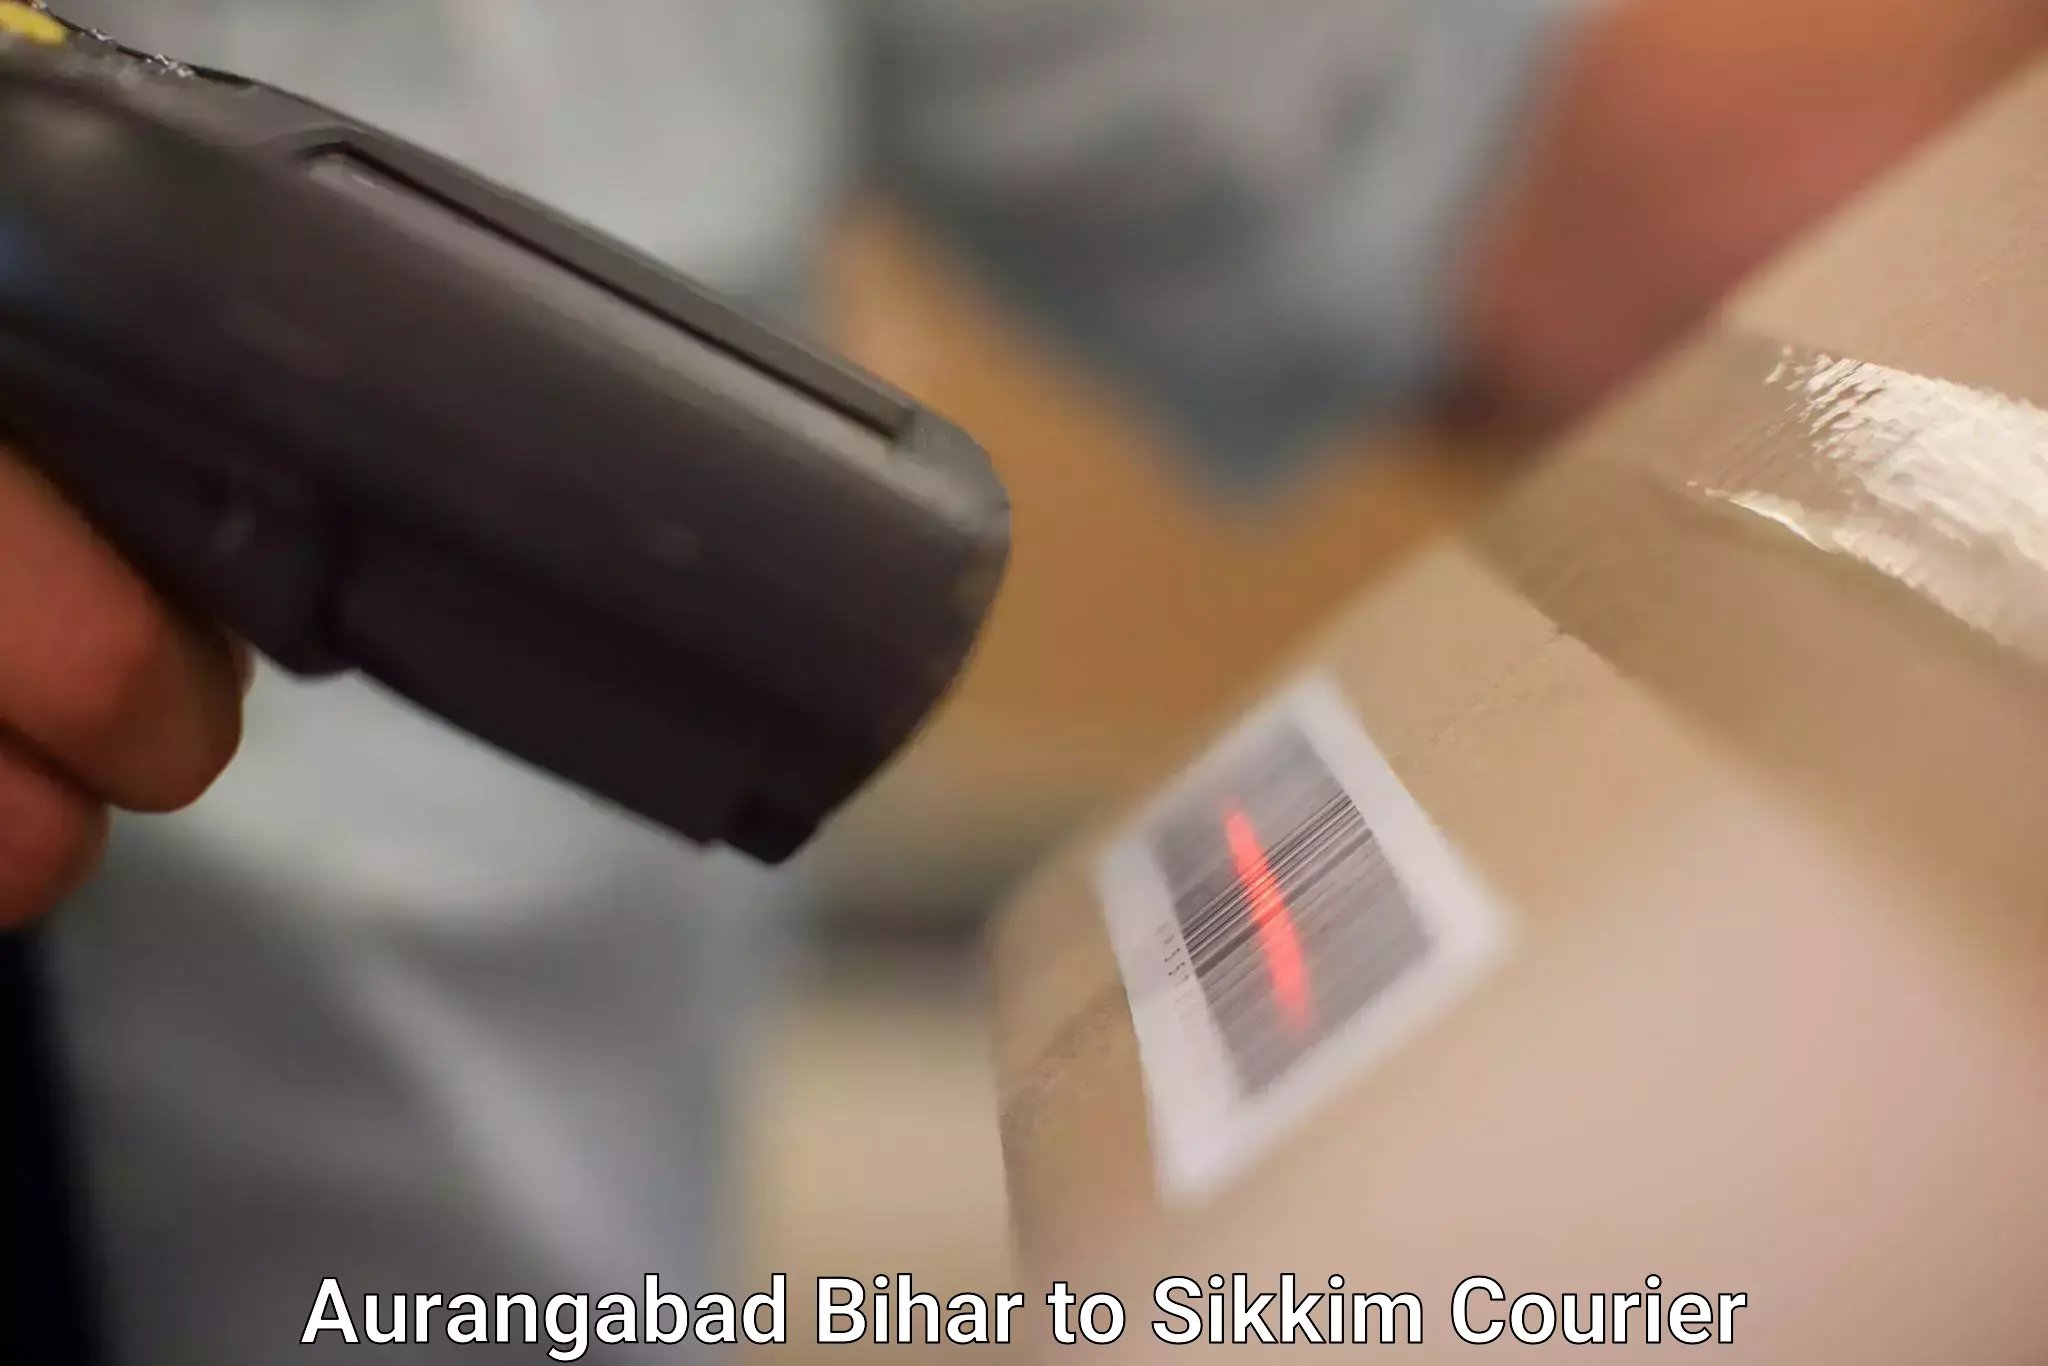 Express courier capabilities Aurangabad Bihar to Sikkim